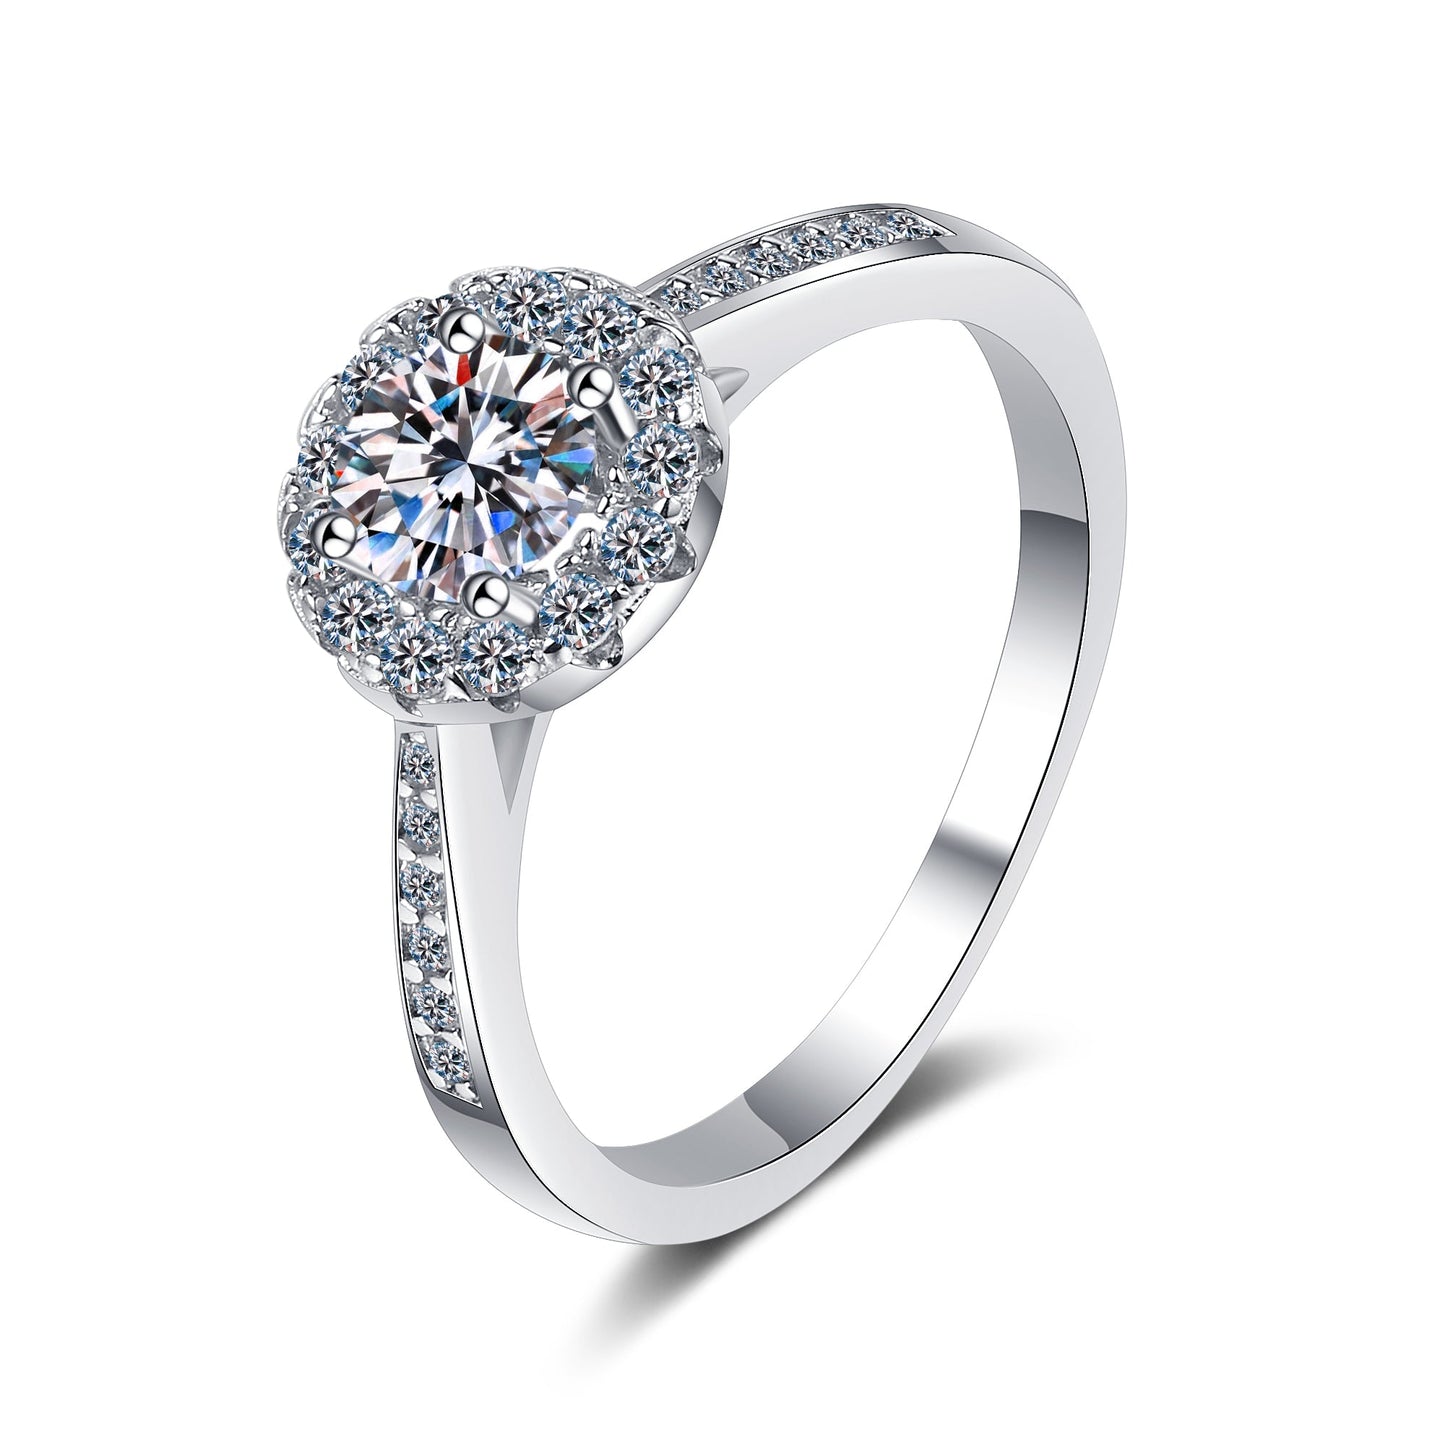 2 CT MOISSANITE Diamond Engagement solitaire Ring, round, Solid 925 Silver, Elegant Wedding Ring, Platinum Plated, Passes Diamond Tester az167 Xaxe.com